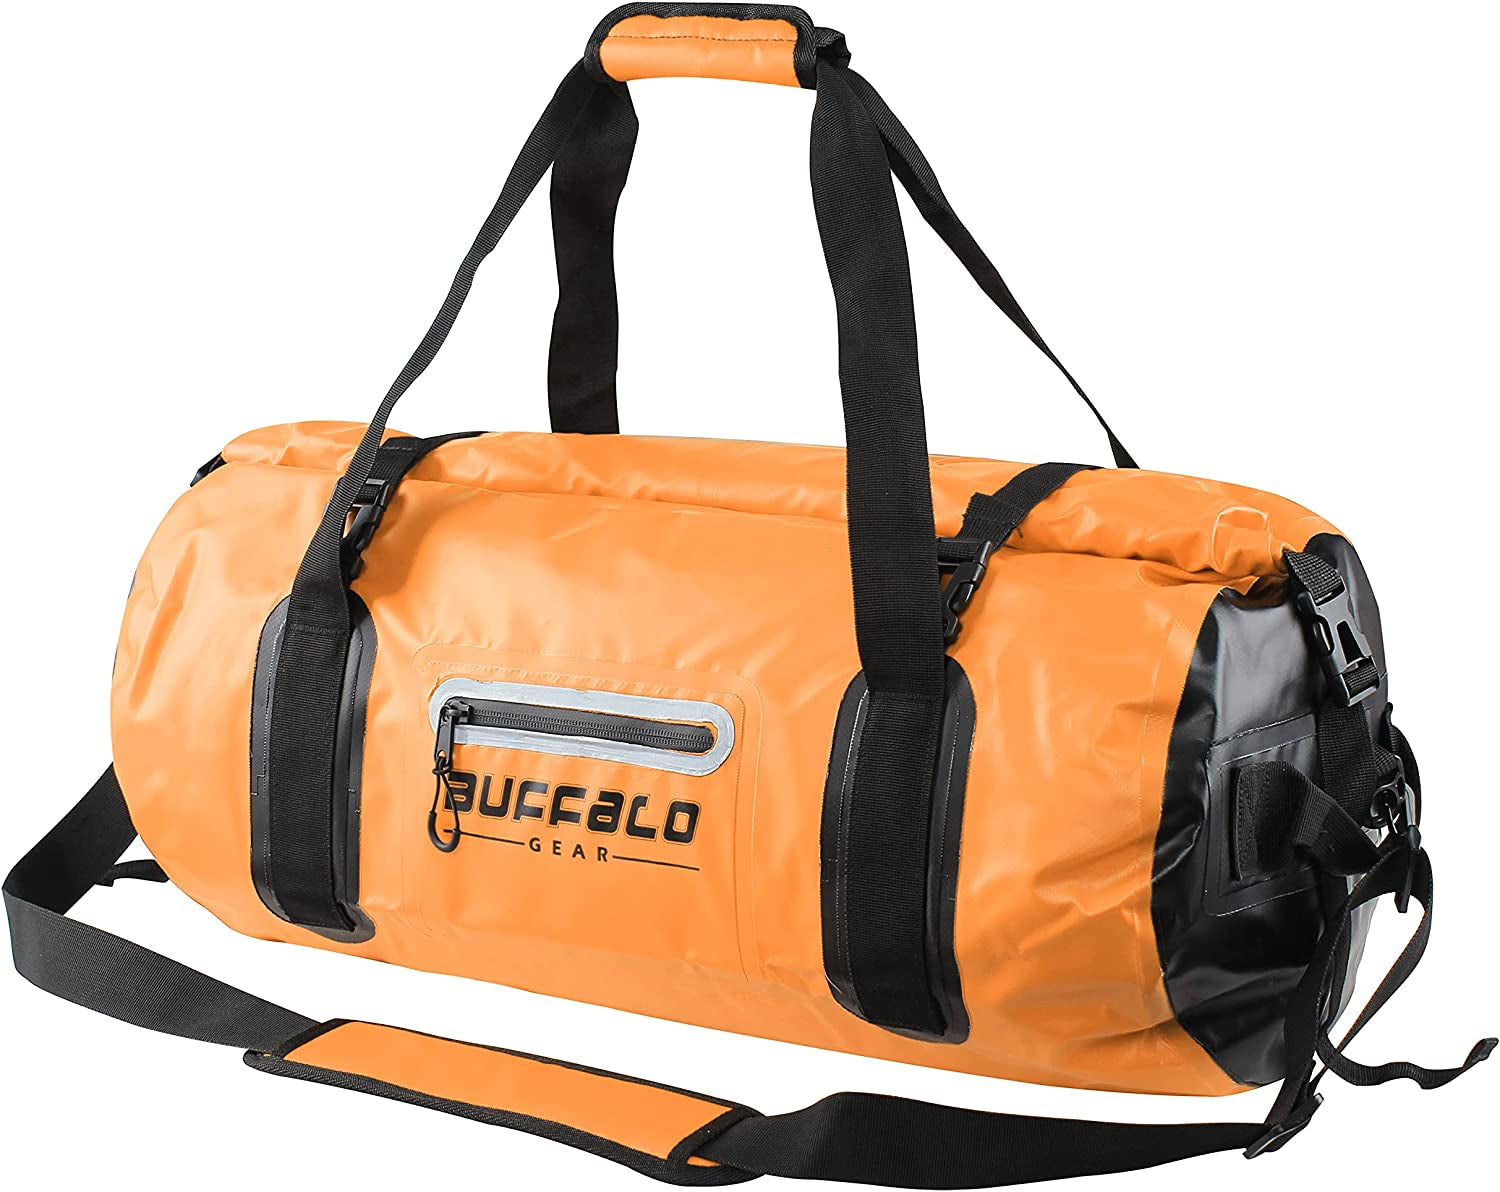 Buffalo Gear Drybag 40L 60L 80L Waterproof Duffle Travel Duffel Dry Bag Heavy Duty Bag for Kayaking, Rafting, Boating, Fishing,Camping (Yellow, 60L)